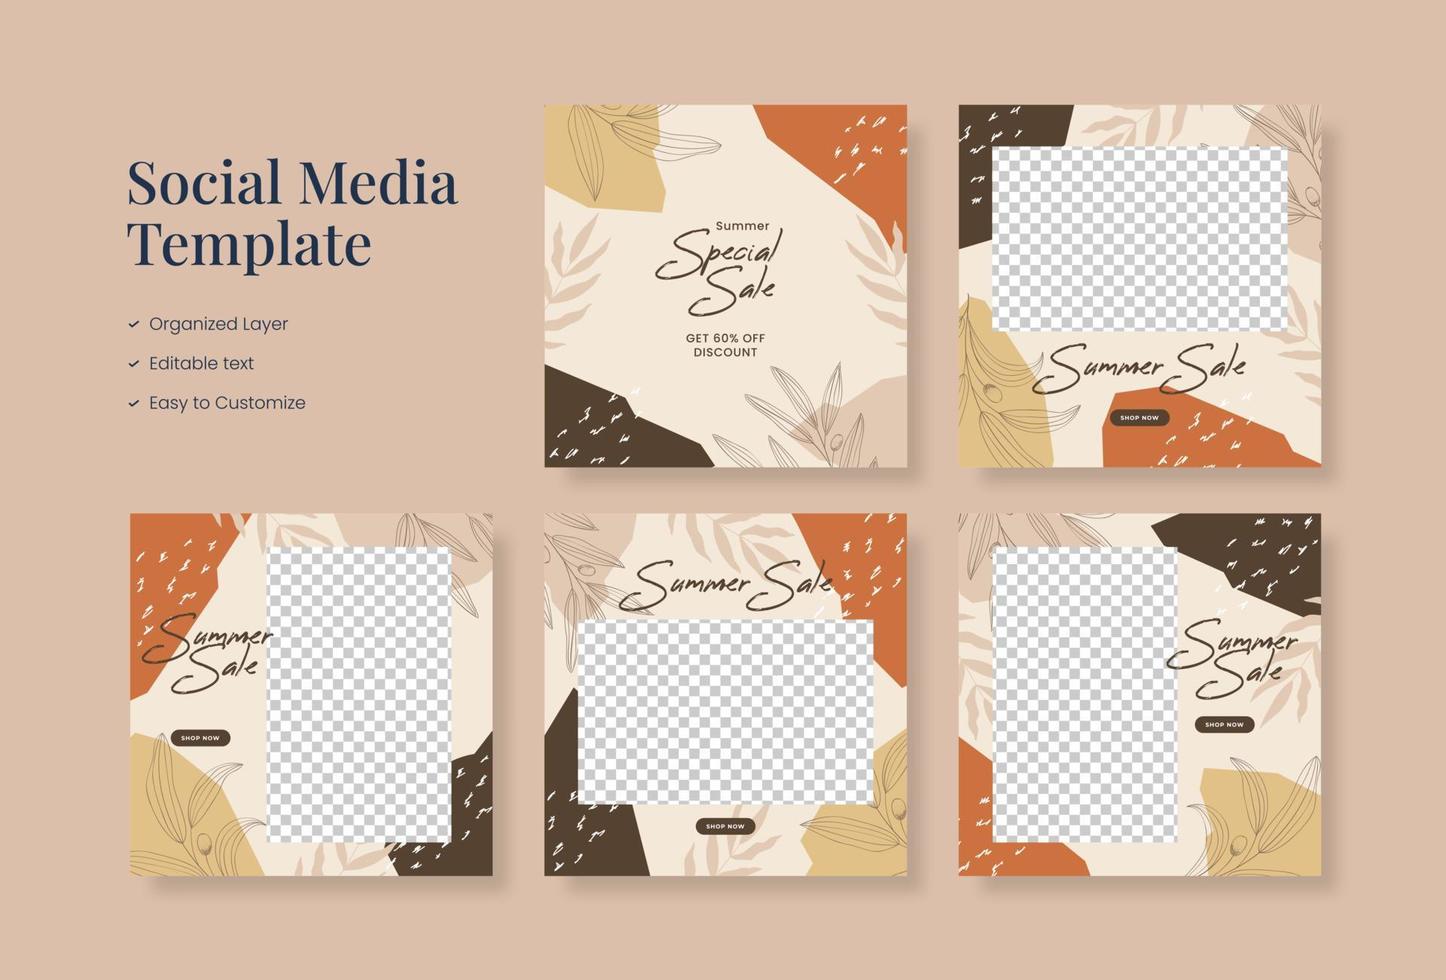 Social media template, trendy editable social media background vector